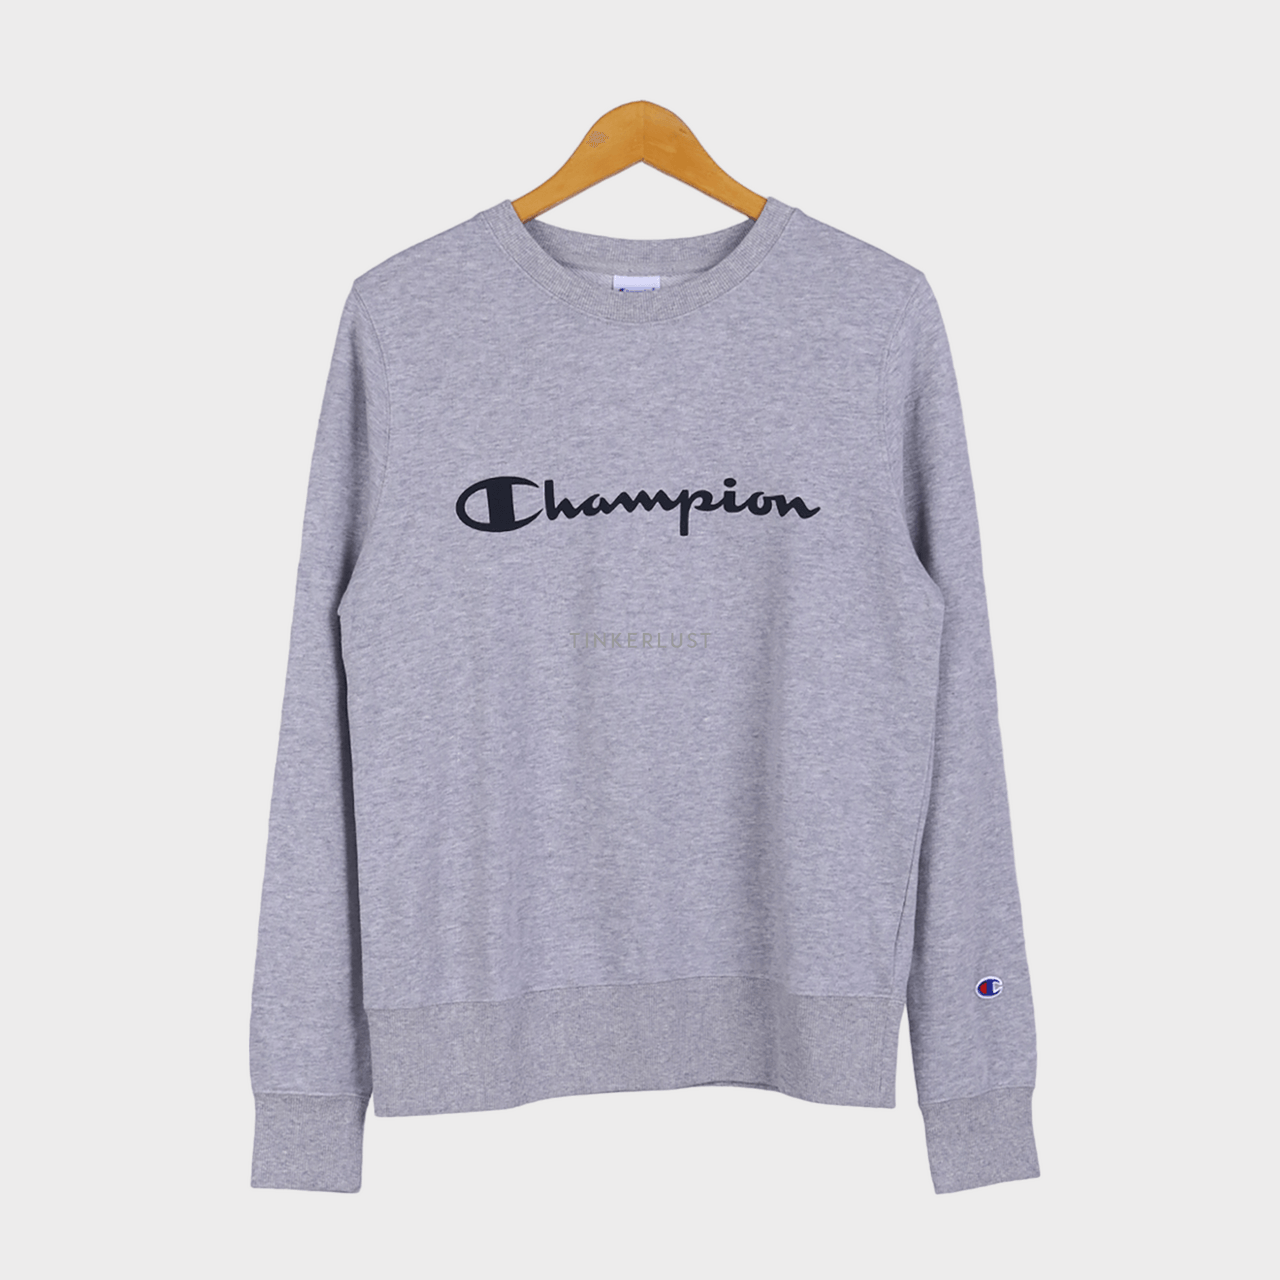 Champion Light Grey Sweater